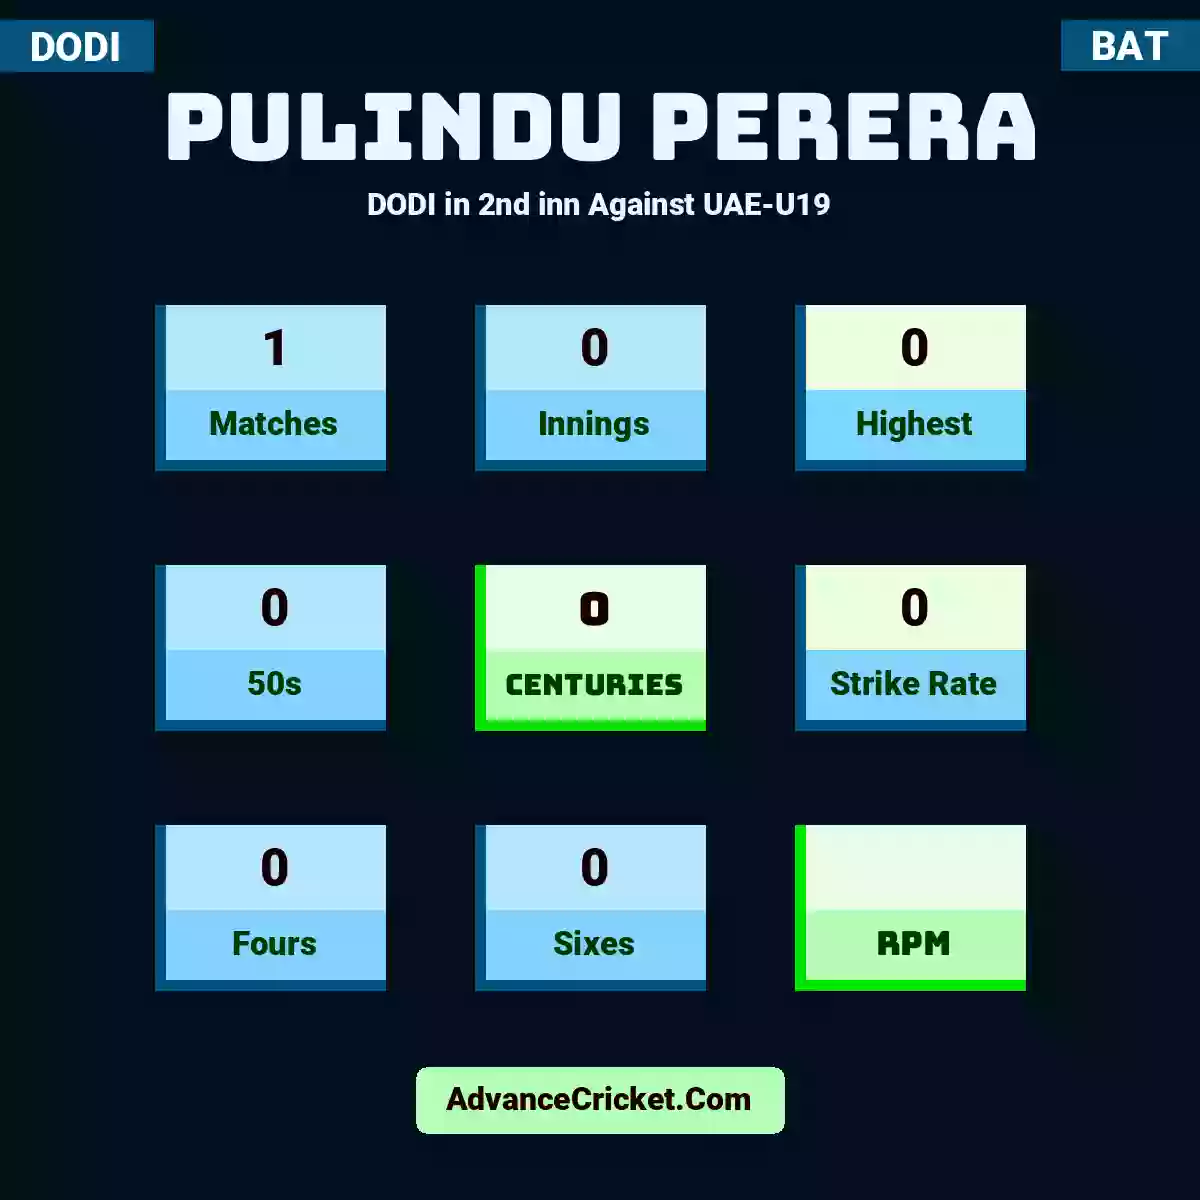 Pulindu Perera DODI  in 2nd inn Against UAE-U19, Pulindu Perera played 1 matches, scored 0 runs as highest, 0 half-centuries, and 0 centuries, with a strike rate of 0. P.Perera hit 0 fours and 0 sixes.